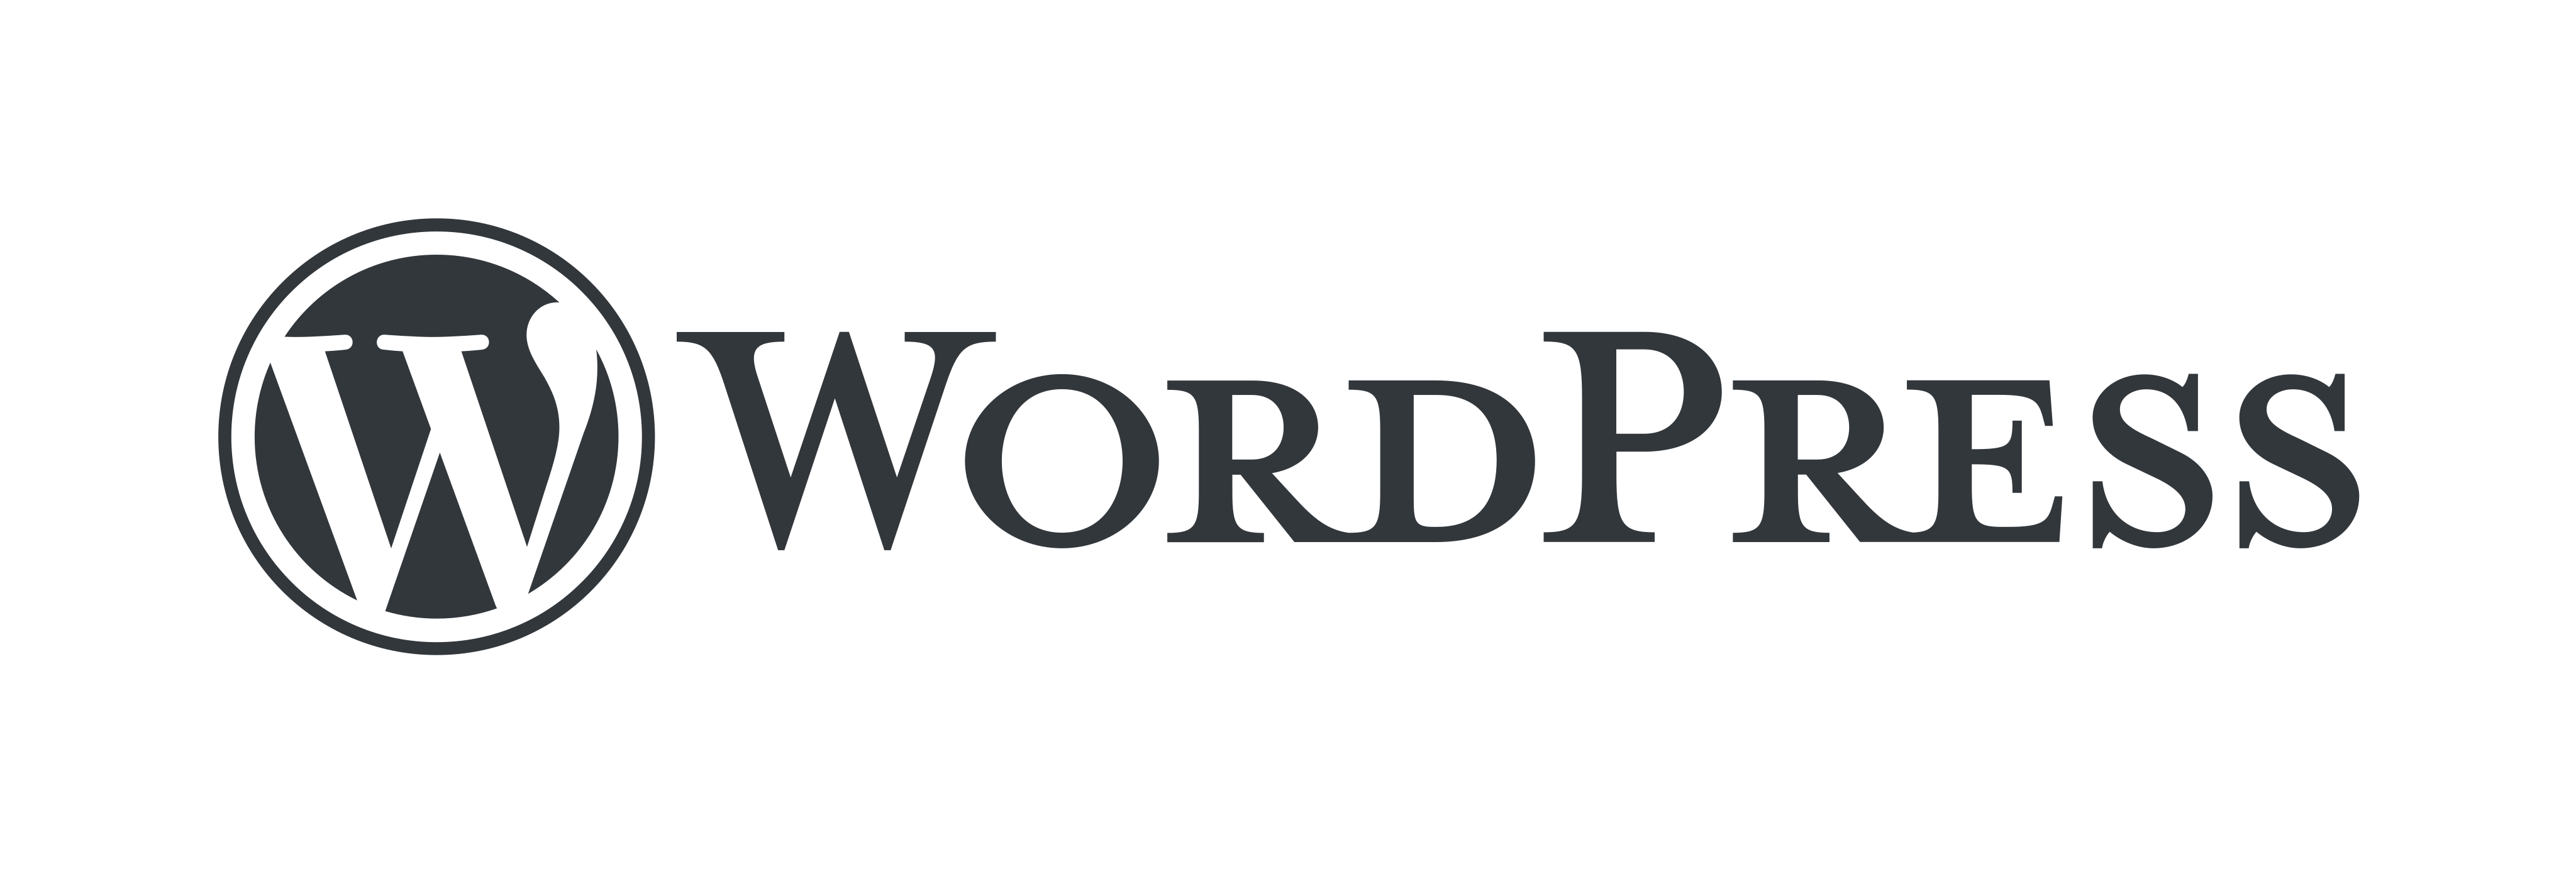 wordpress-logo-3-1